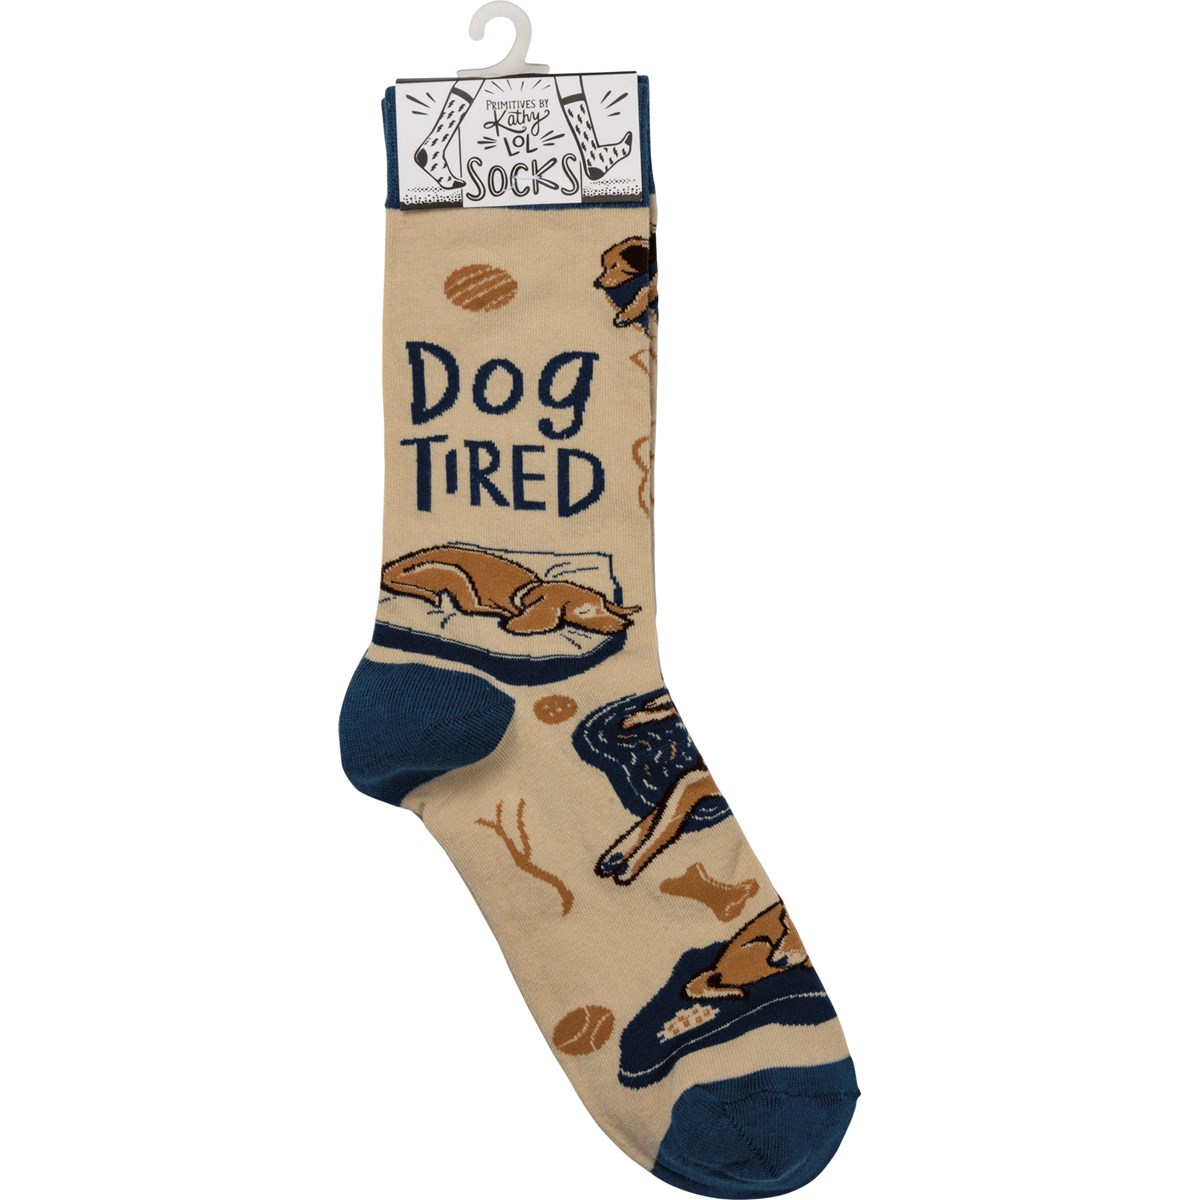 Socks - Dog Tired - One Size Fits Most - Cotton, Nylon, Spandex